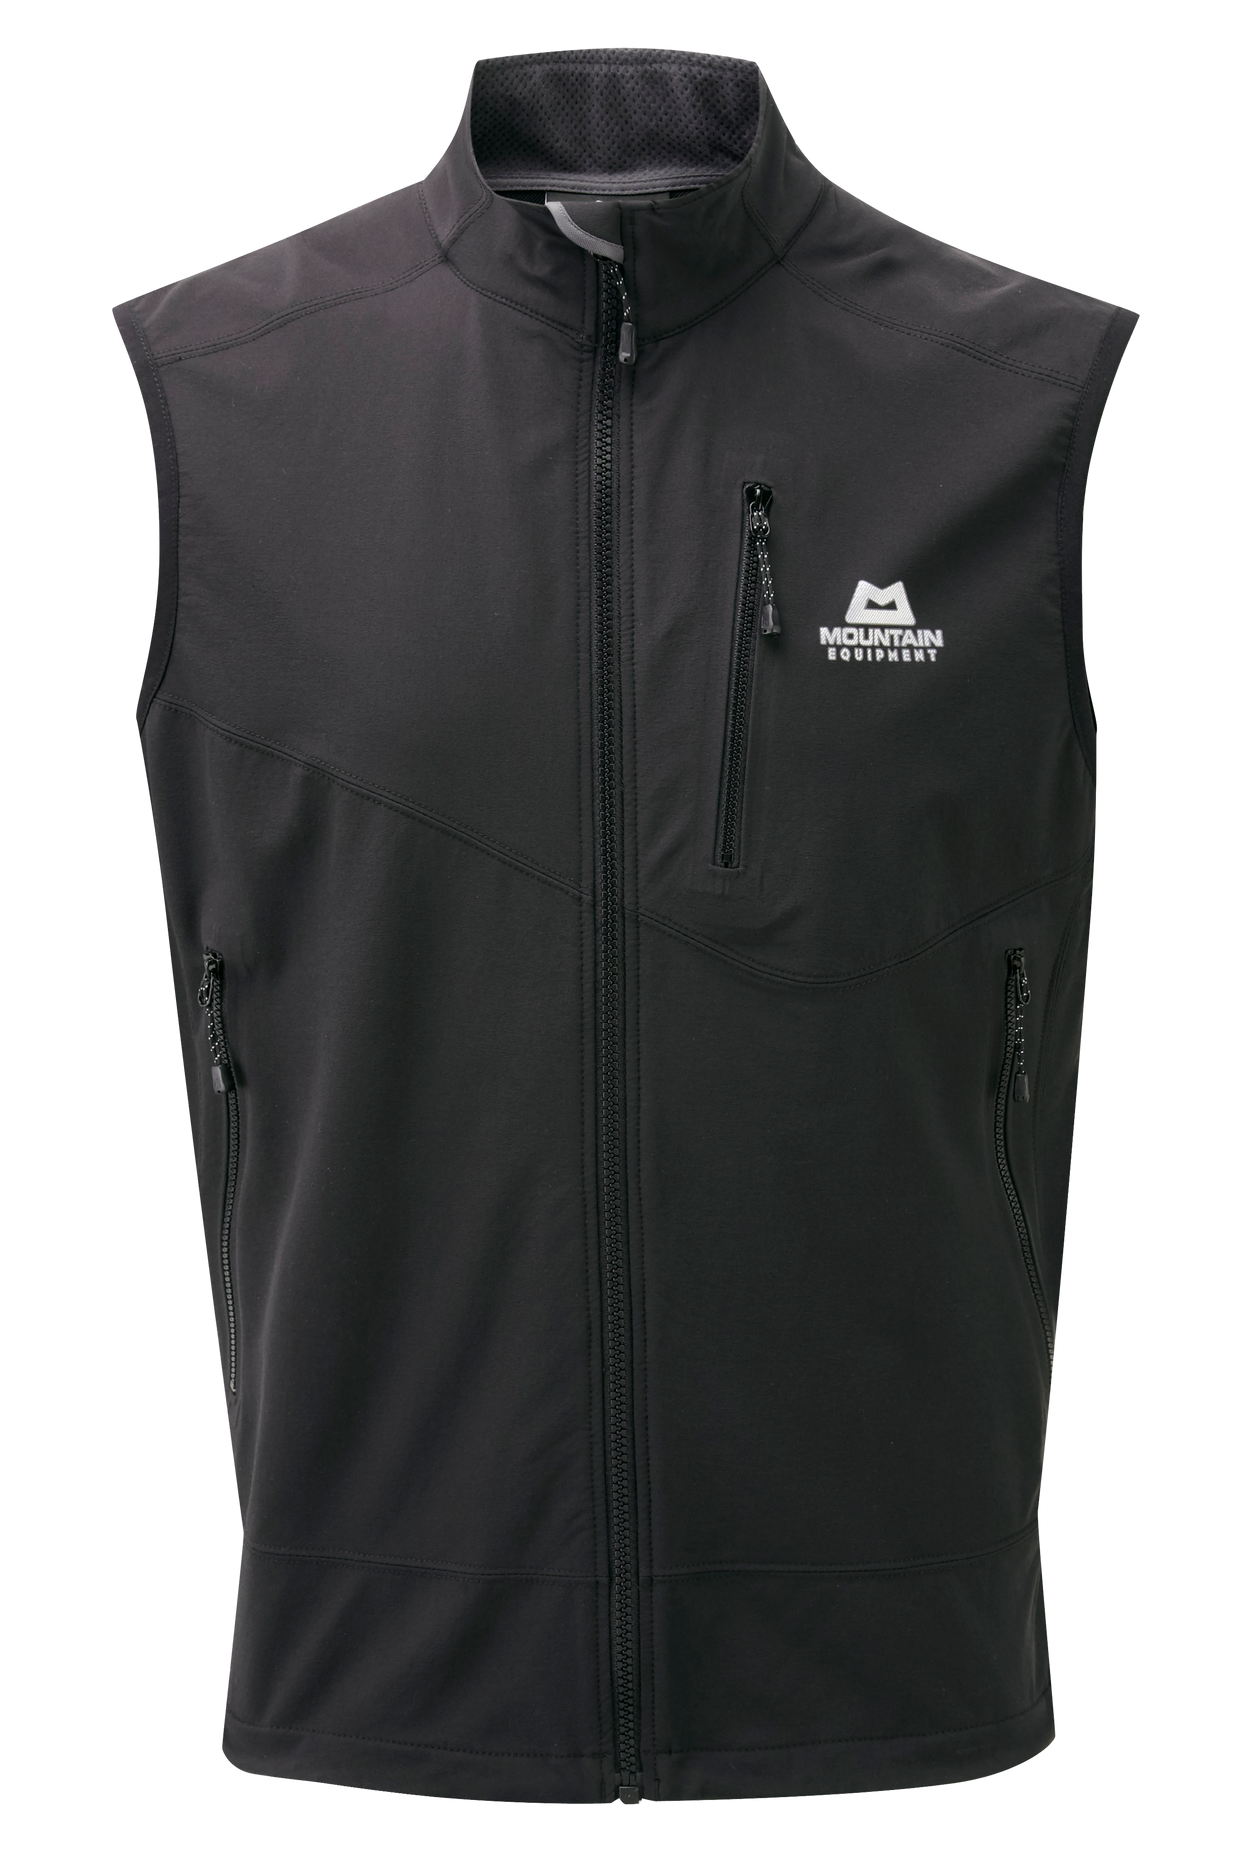 Mountain Equipment pánská softshellová vesta Frontier Vest Barva: black, Velikost: XL